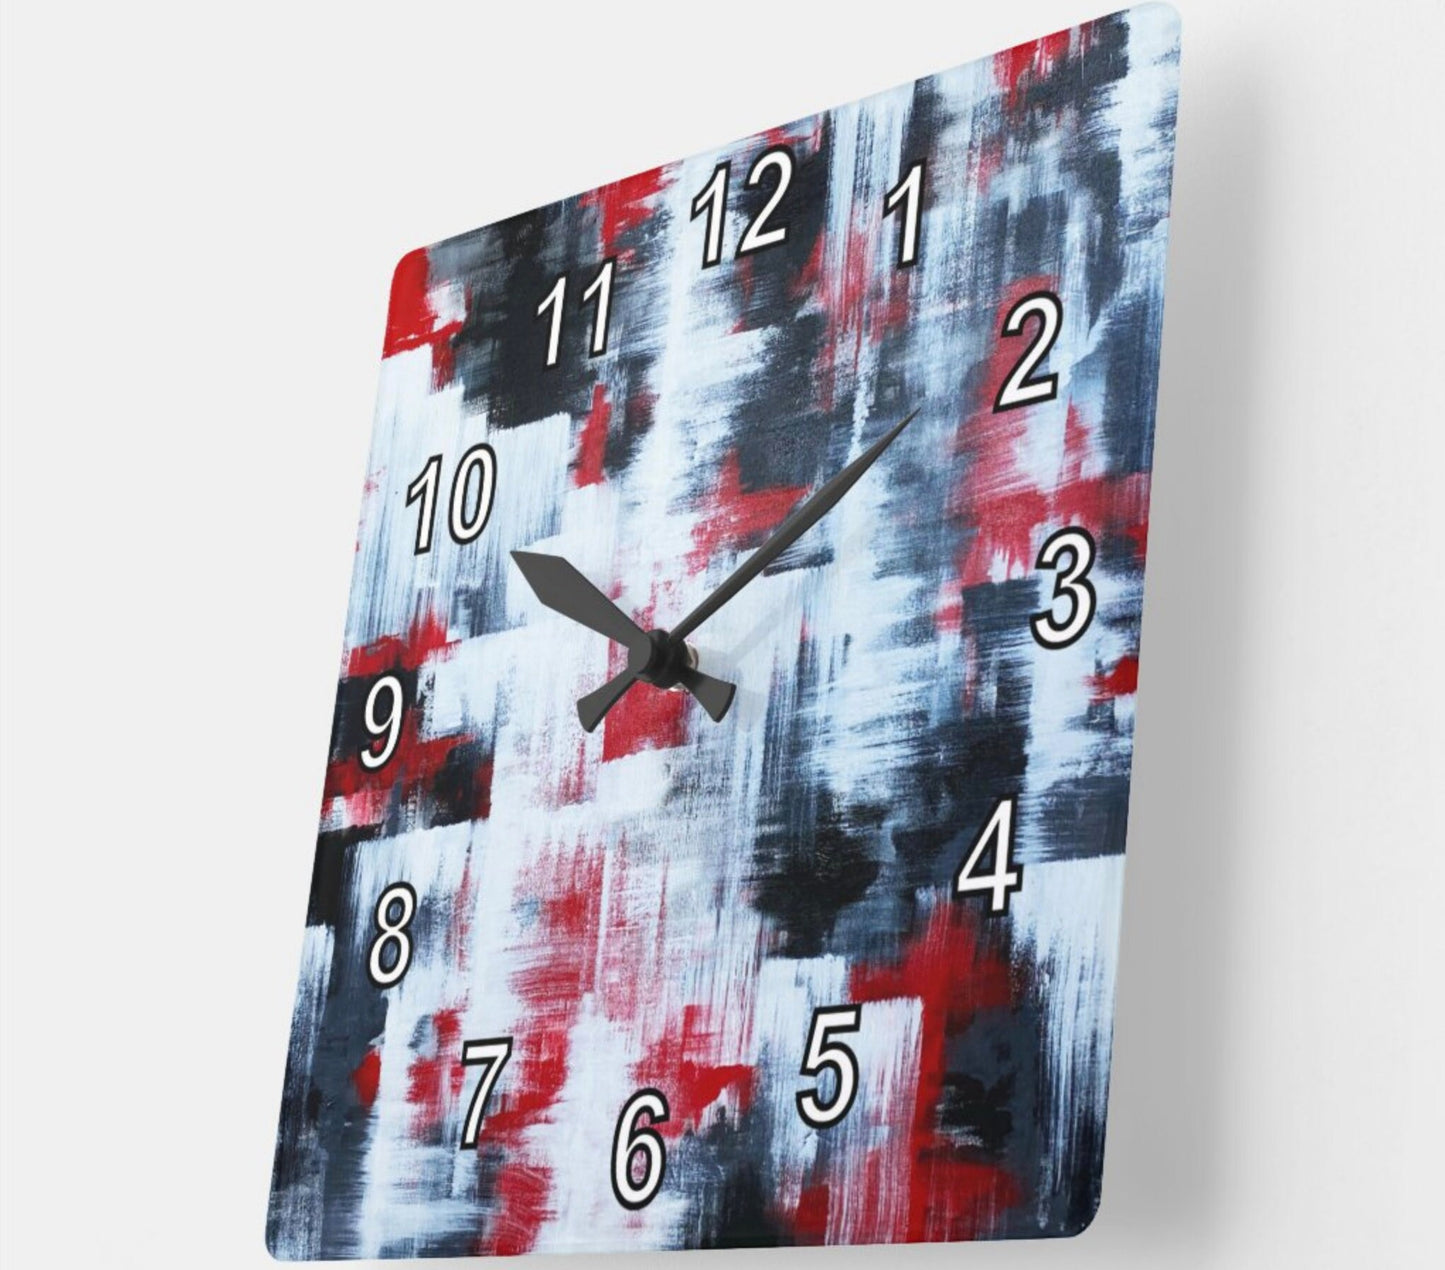 Abstract Expressionist Art Wall Clock by ArtClocks "Rift" Blankenship New Decor Gift